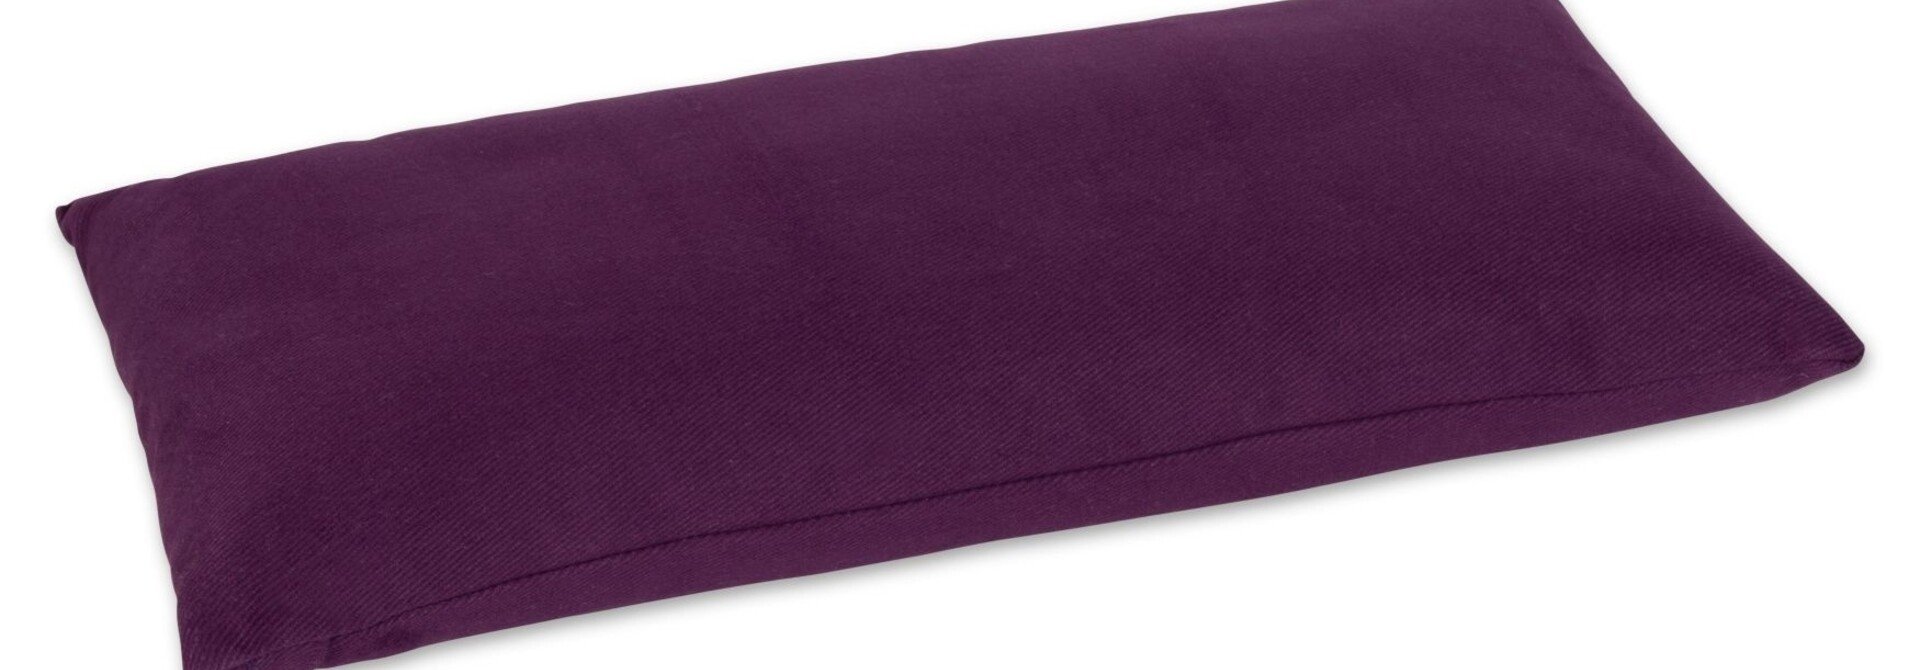 Yogisha Meditation Bench Cushion Deluxe - Purple